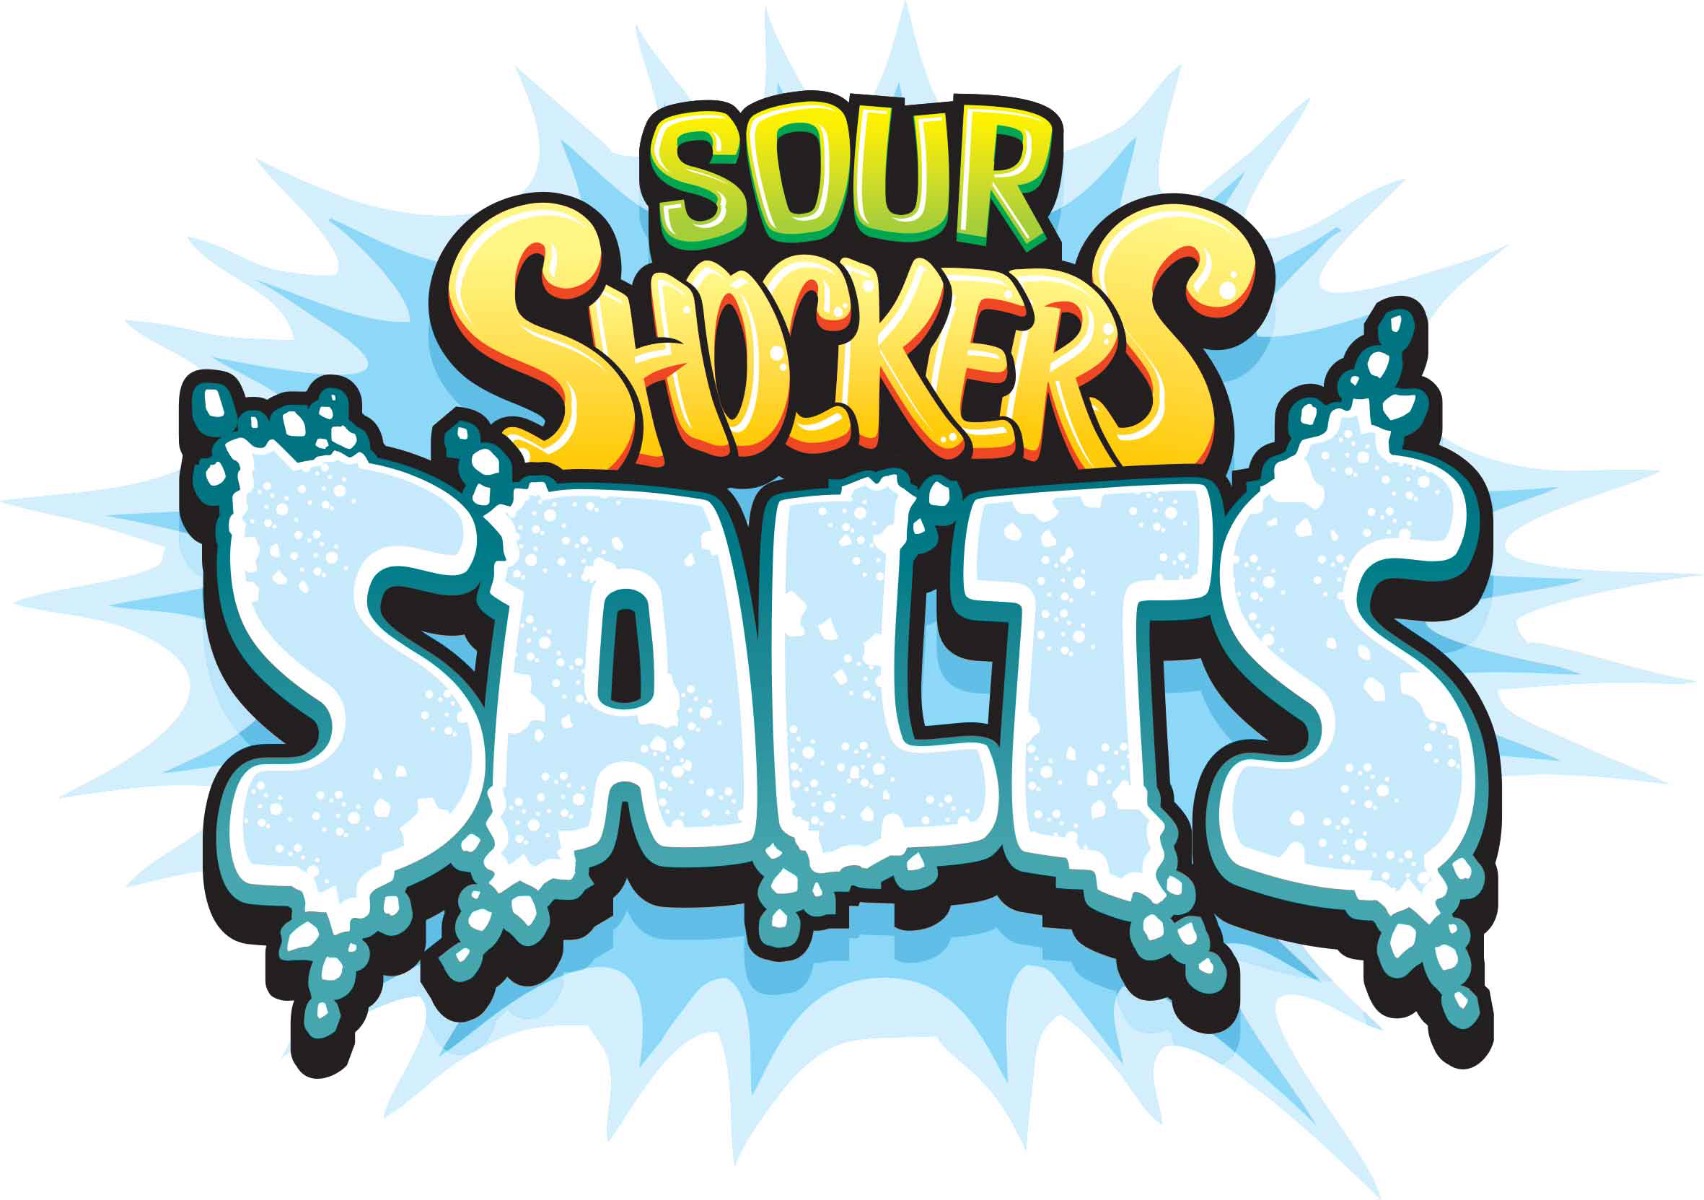 Sour Shockers Salts